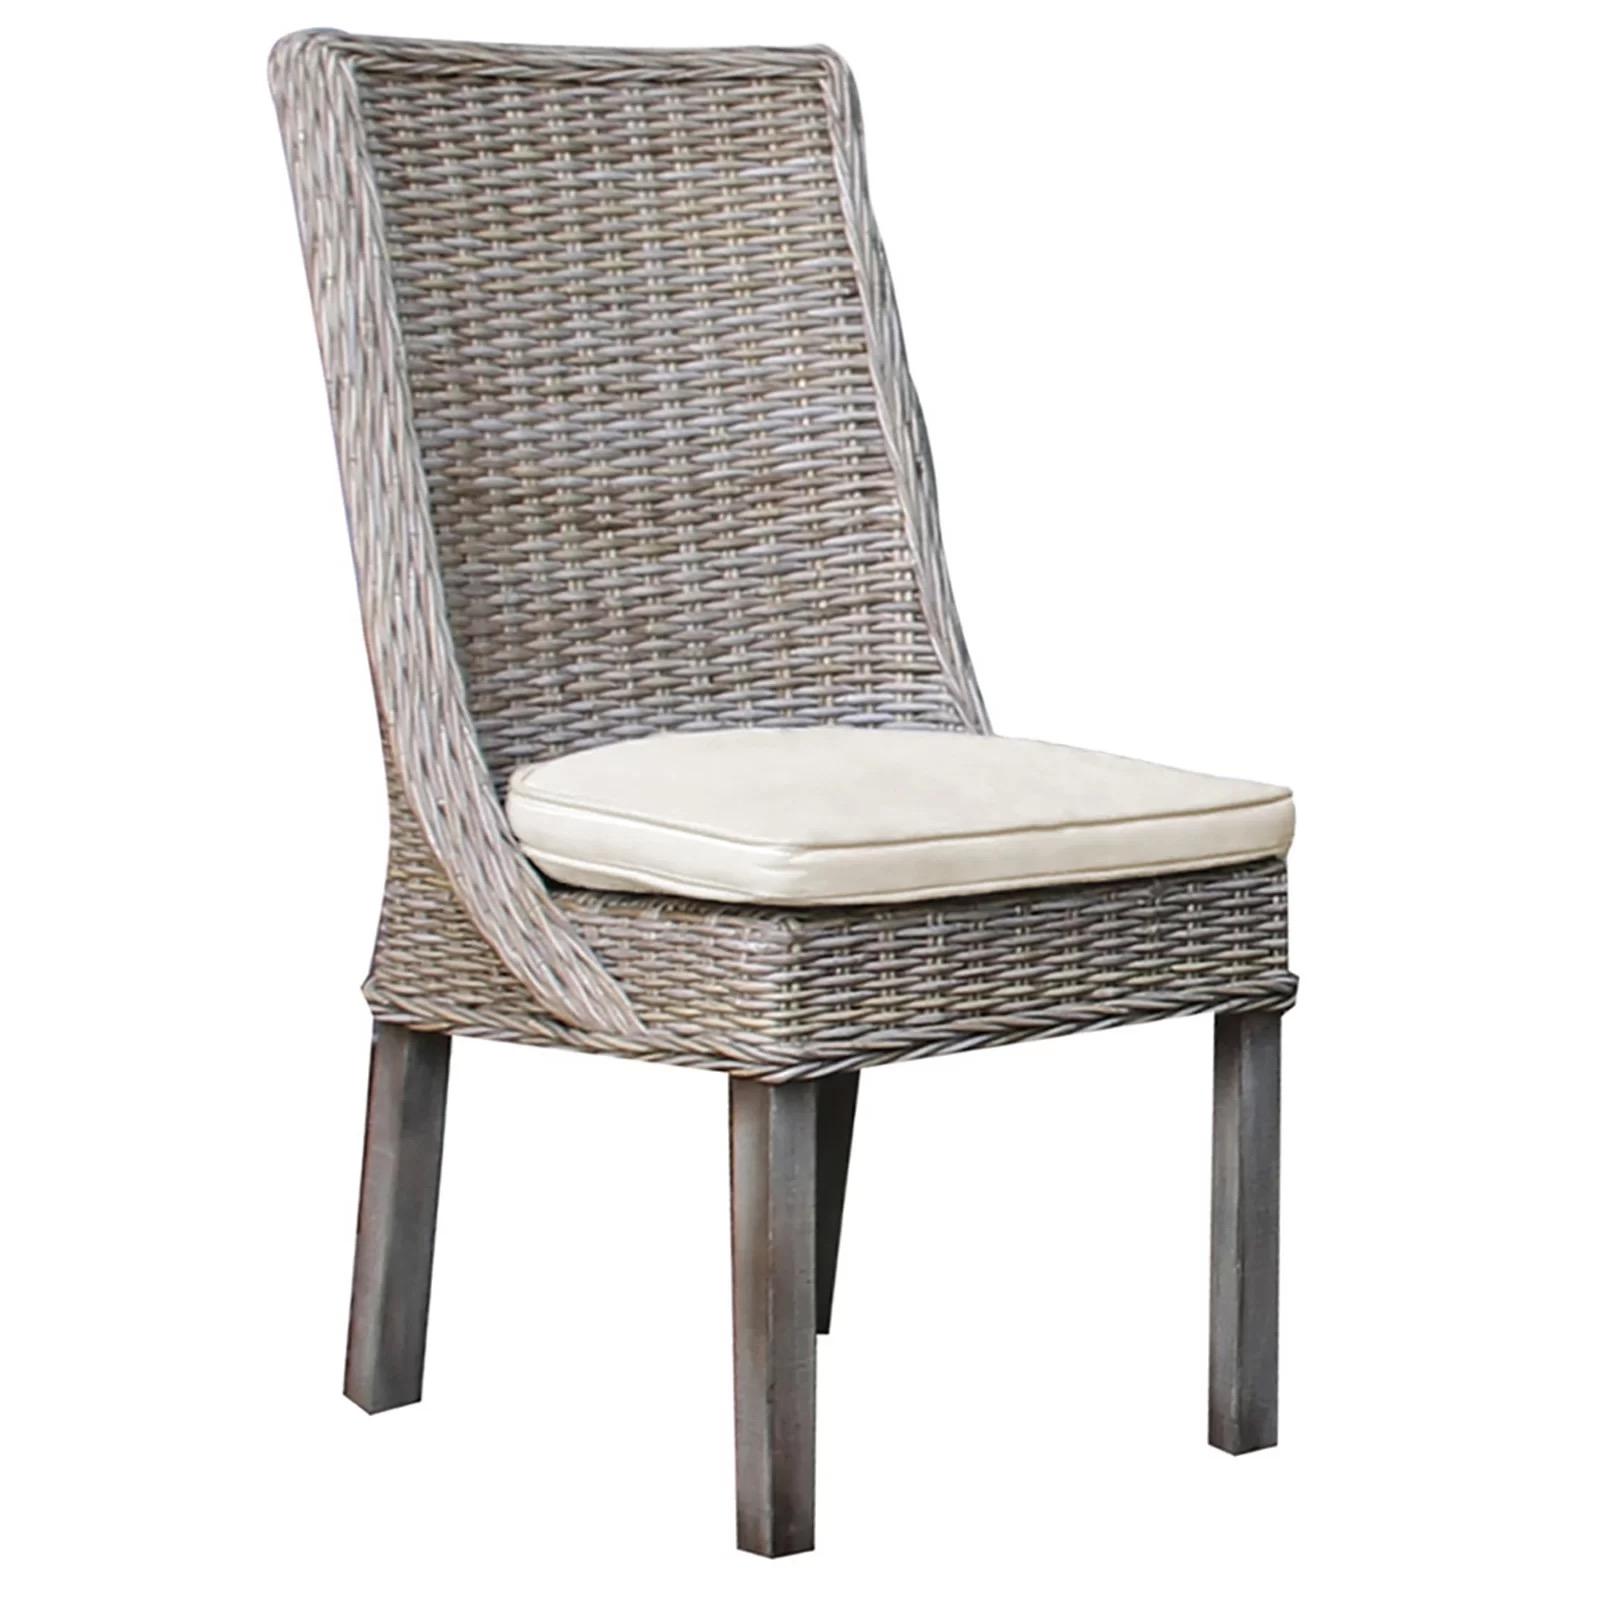 Panama Jack Exuma Outdoor Side Chair